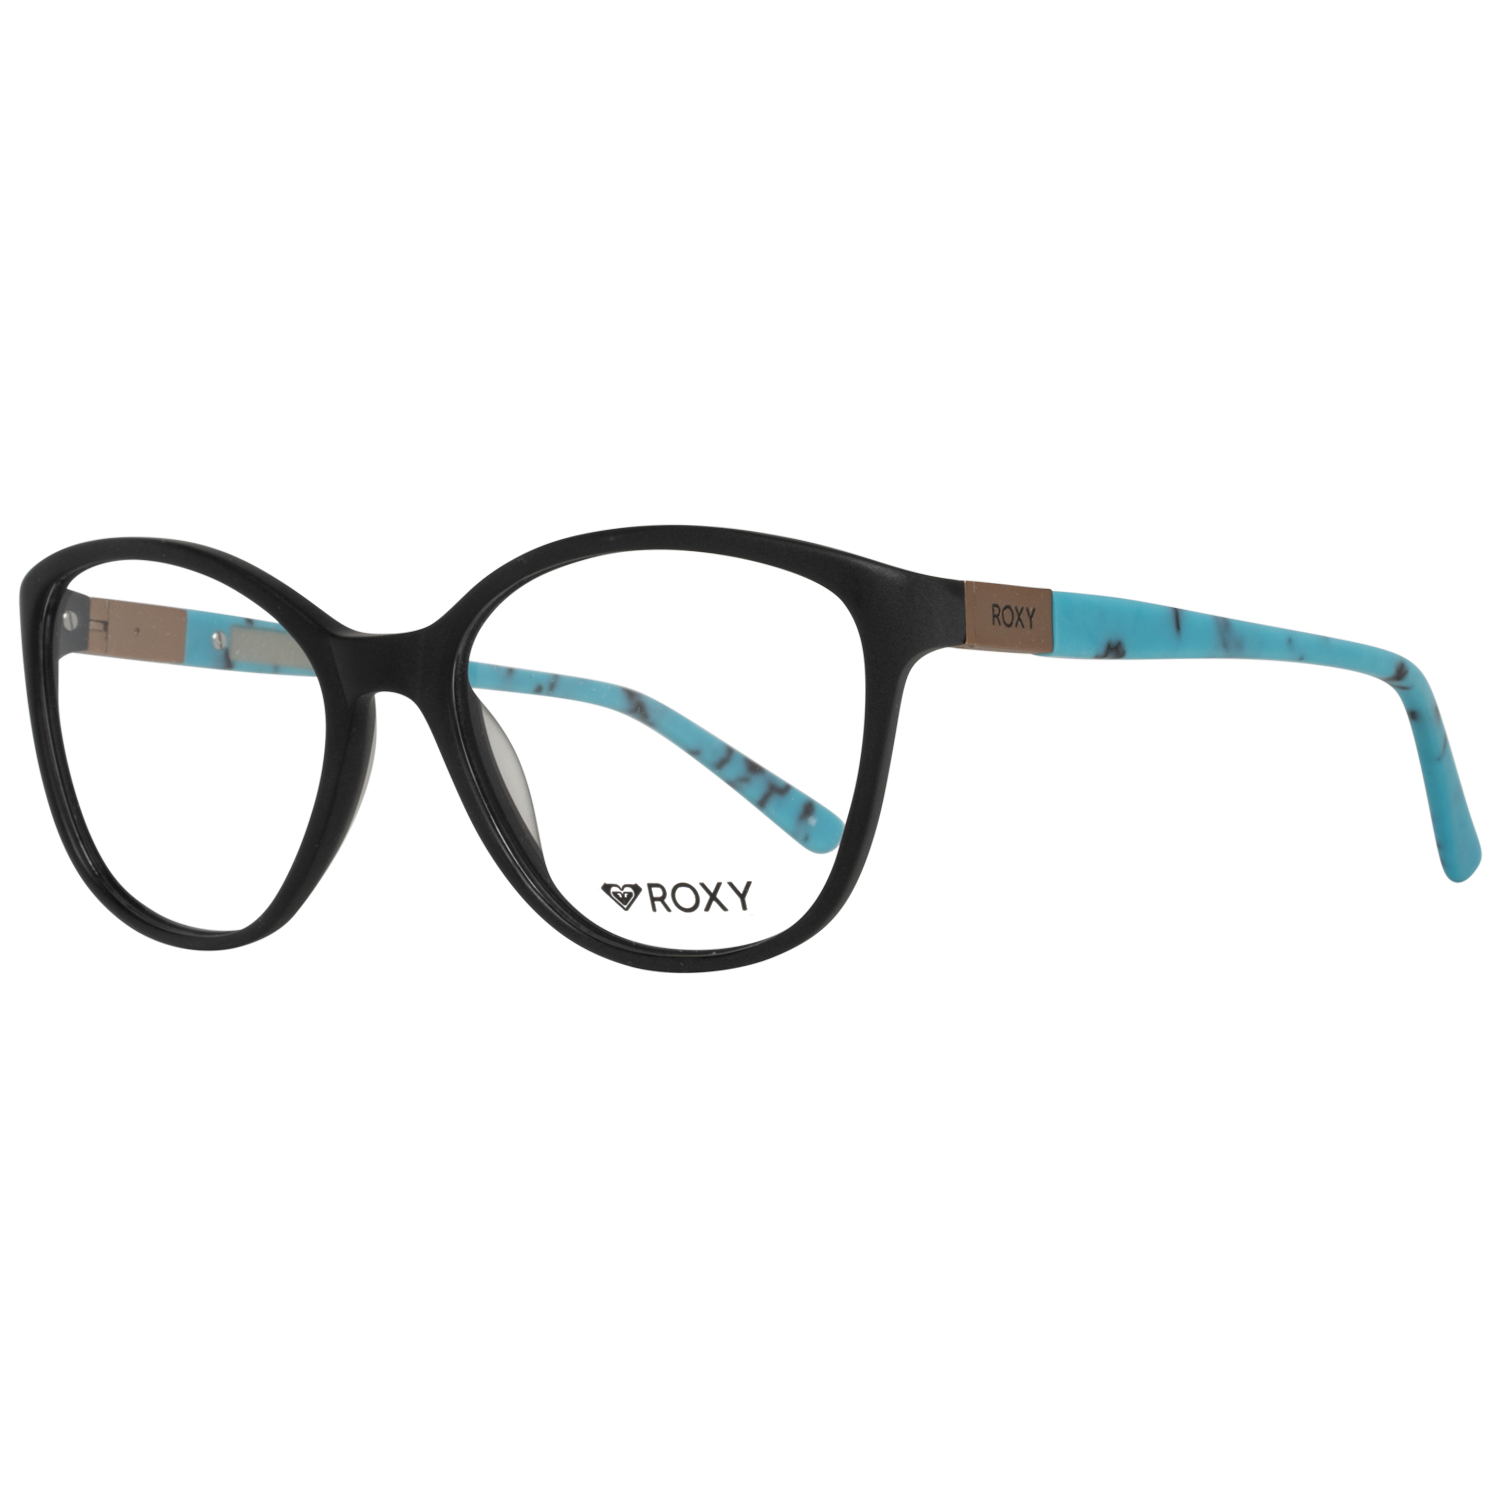 Roxy Frames Roxy Glasses Optical Frame ERJEG03024 DBLK 53 Eyeglasses Eyewear UK USA Australia 